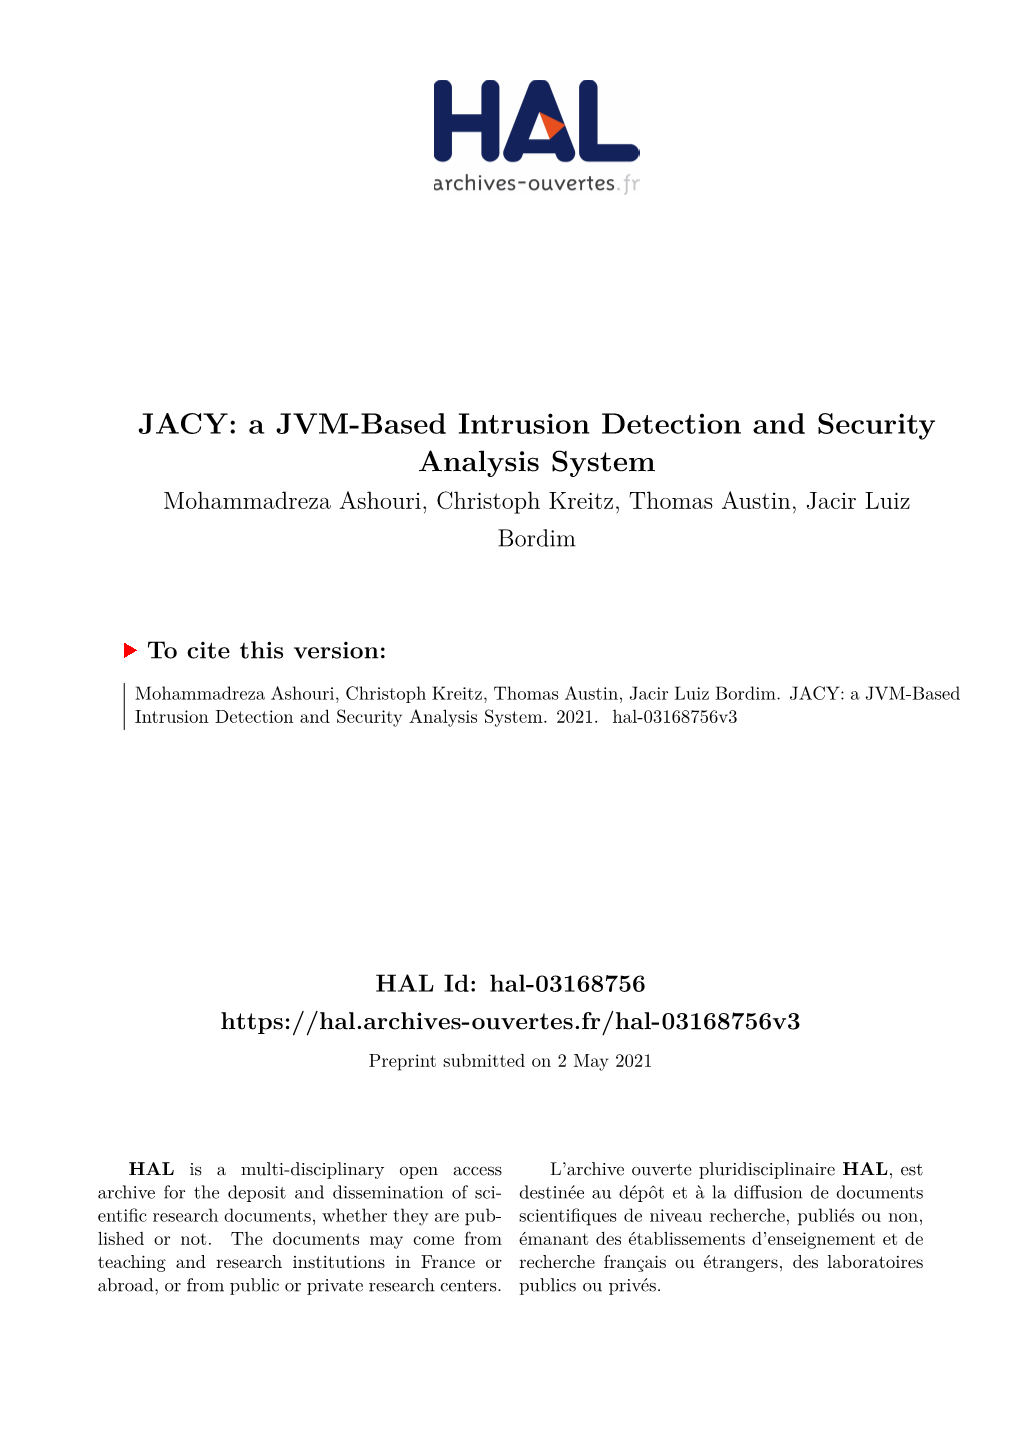 A JVM-Based Intrusion Detection and Security Analysis System Mohammadreza Ashouri, Christoph Kreitz, Thomas Austin, Jacir Luiz Bordim